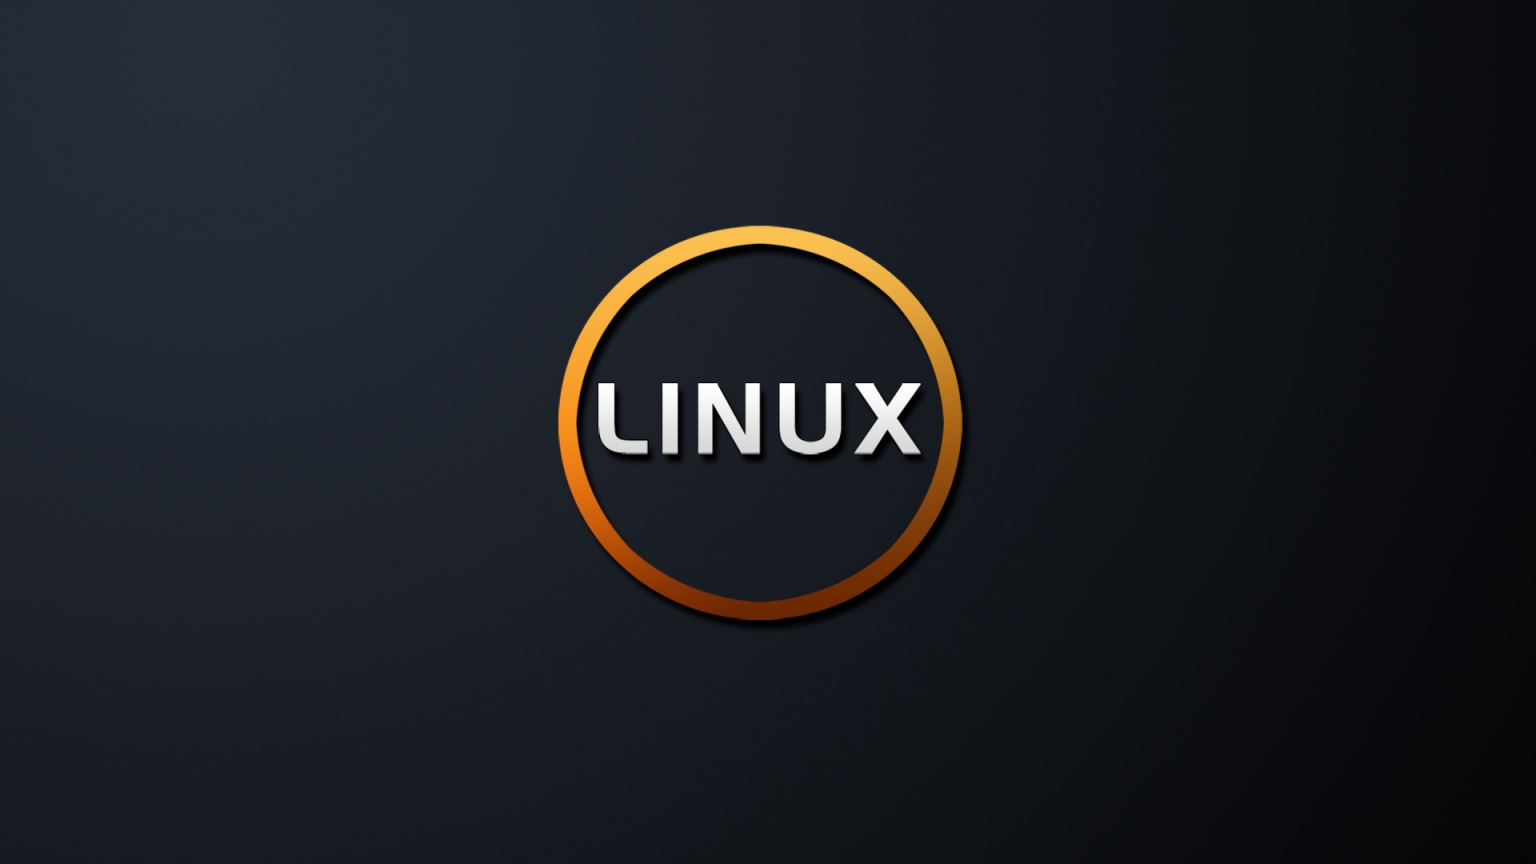 Linux OS Logo for 1536 x 864 HDTV resolution